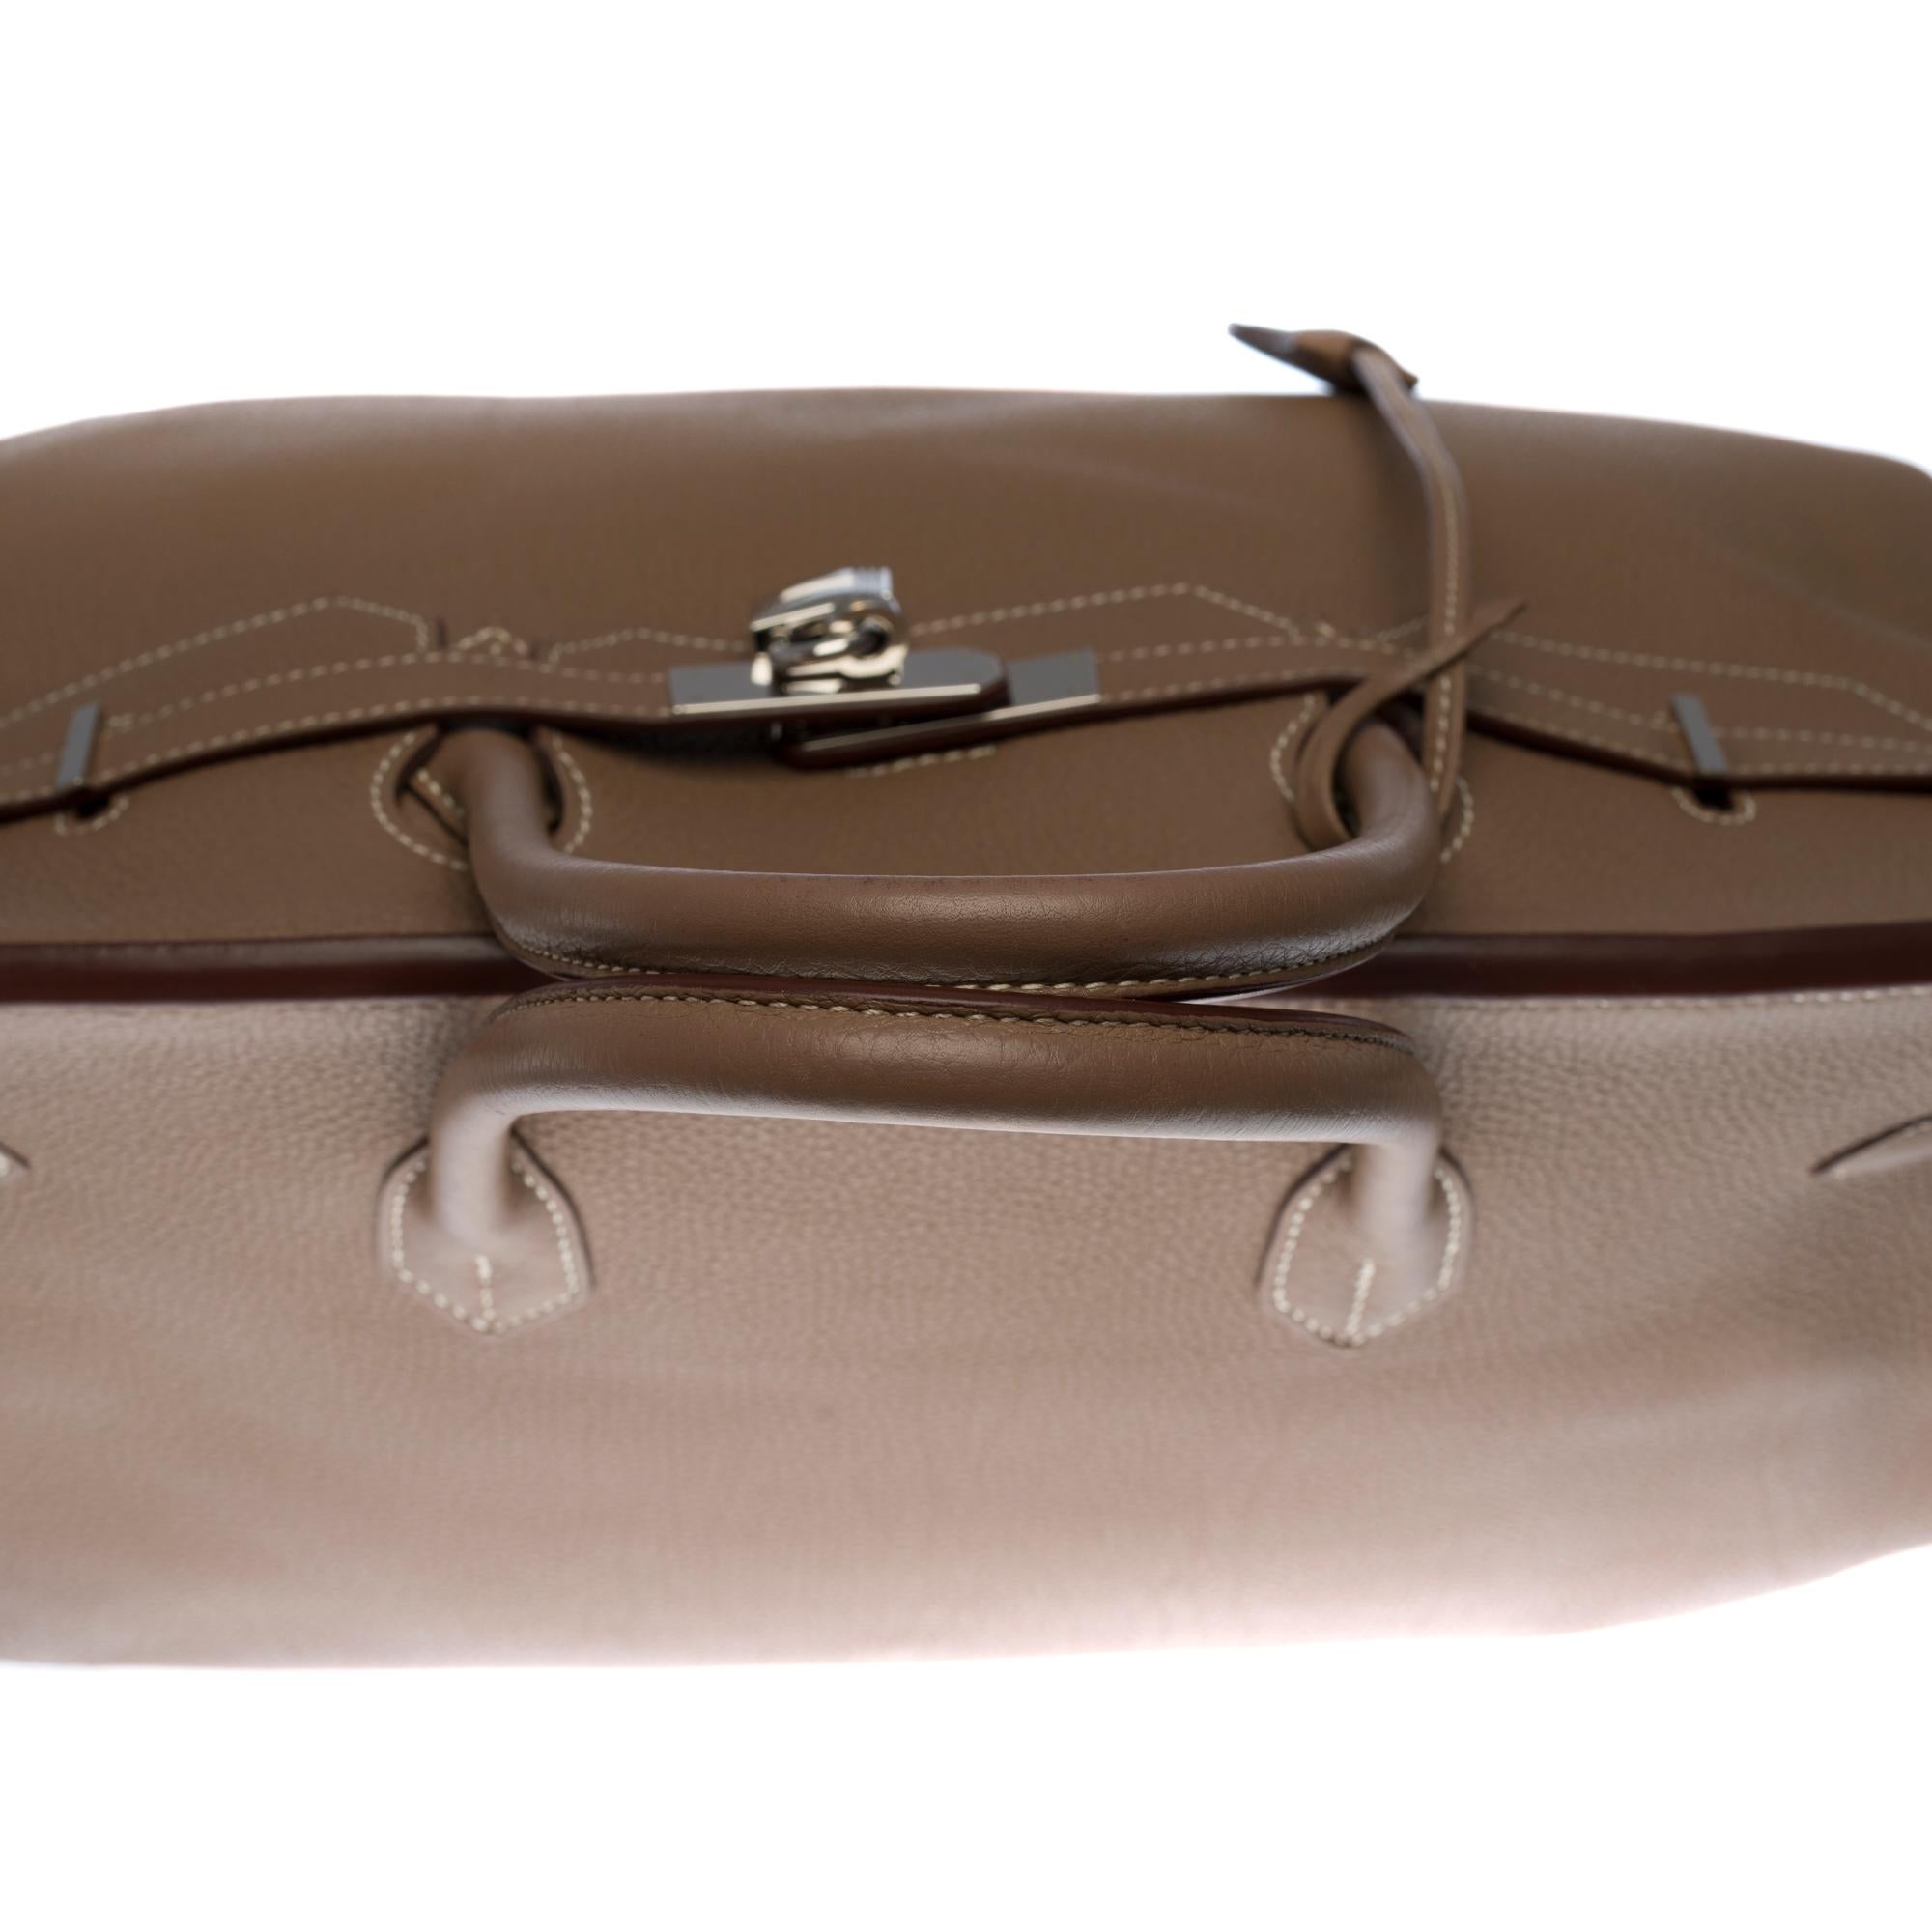 Stunning Hermes Birkin 40cm handbag in Etoupe Togo leather, SHW 2